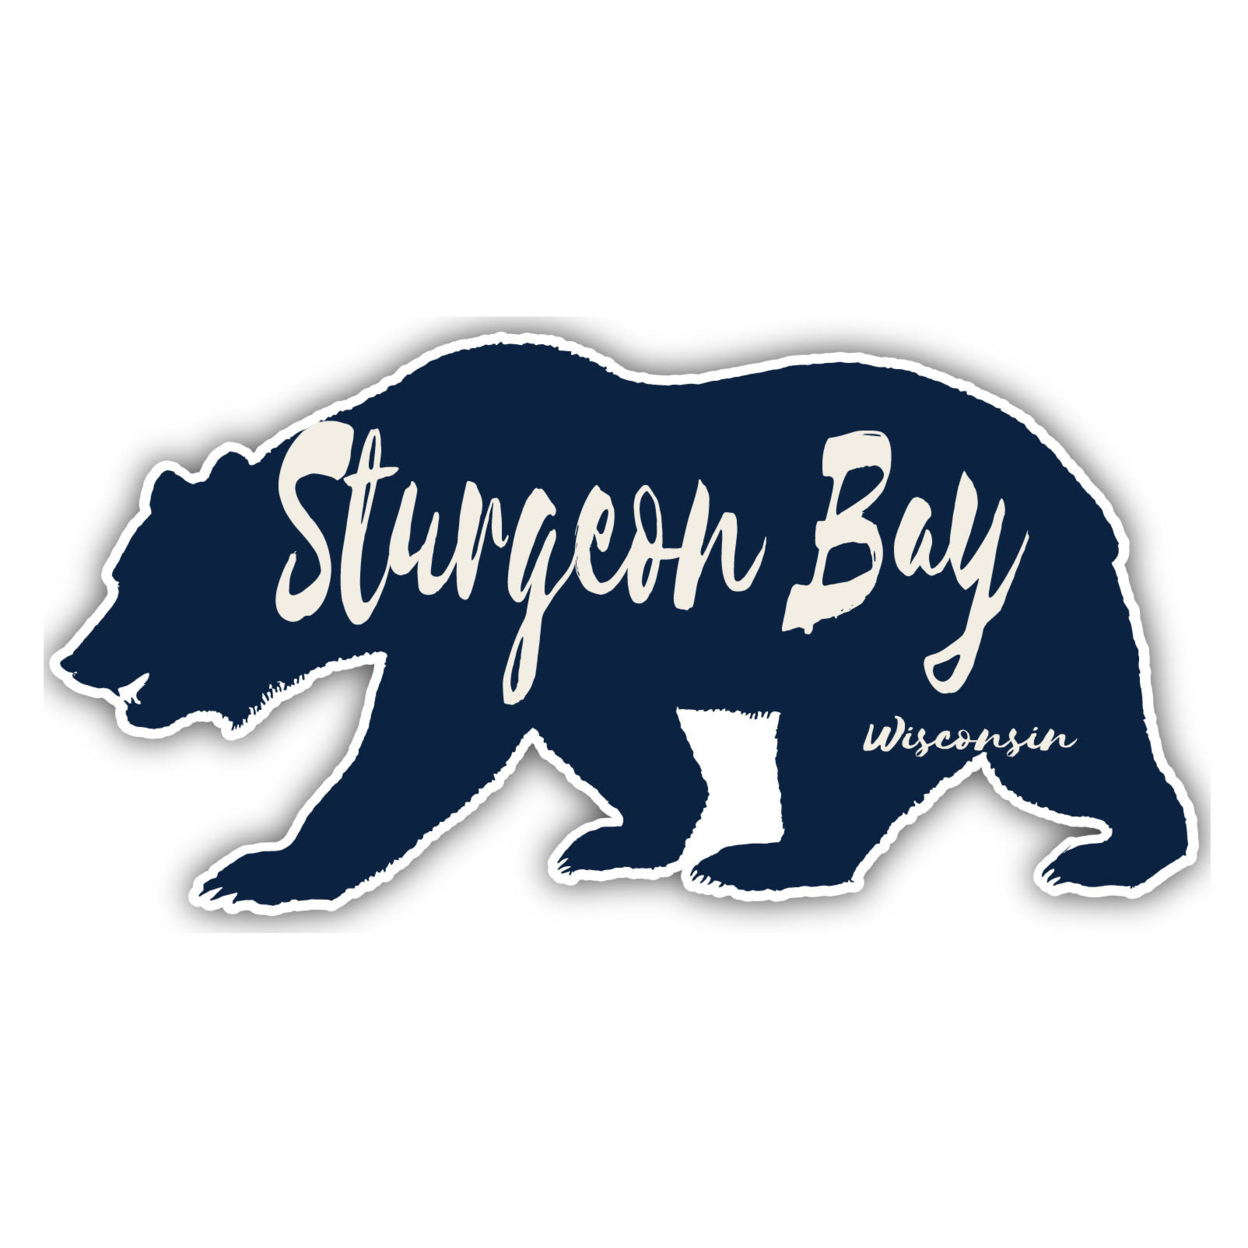 Sturgeon Bay Wisconsin Souvenir Decorative Stickers (Choose Theme And Size) - Single Unit, 2-Inch, Camp Life